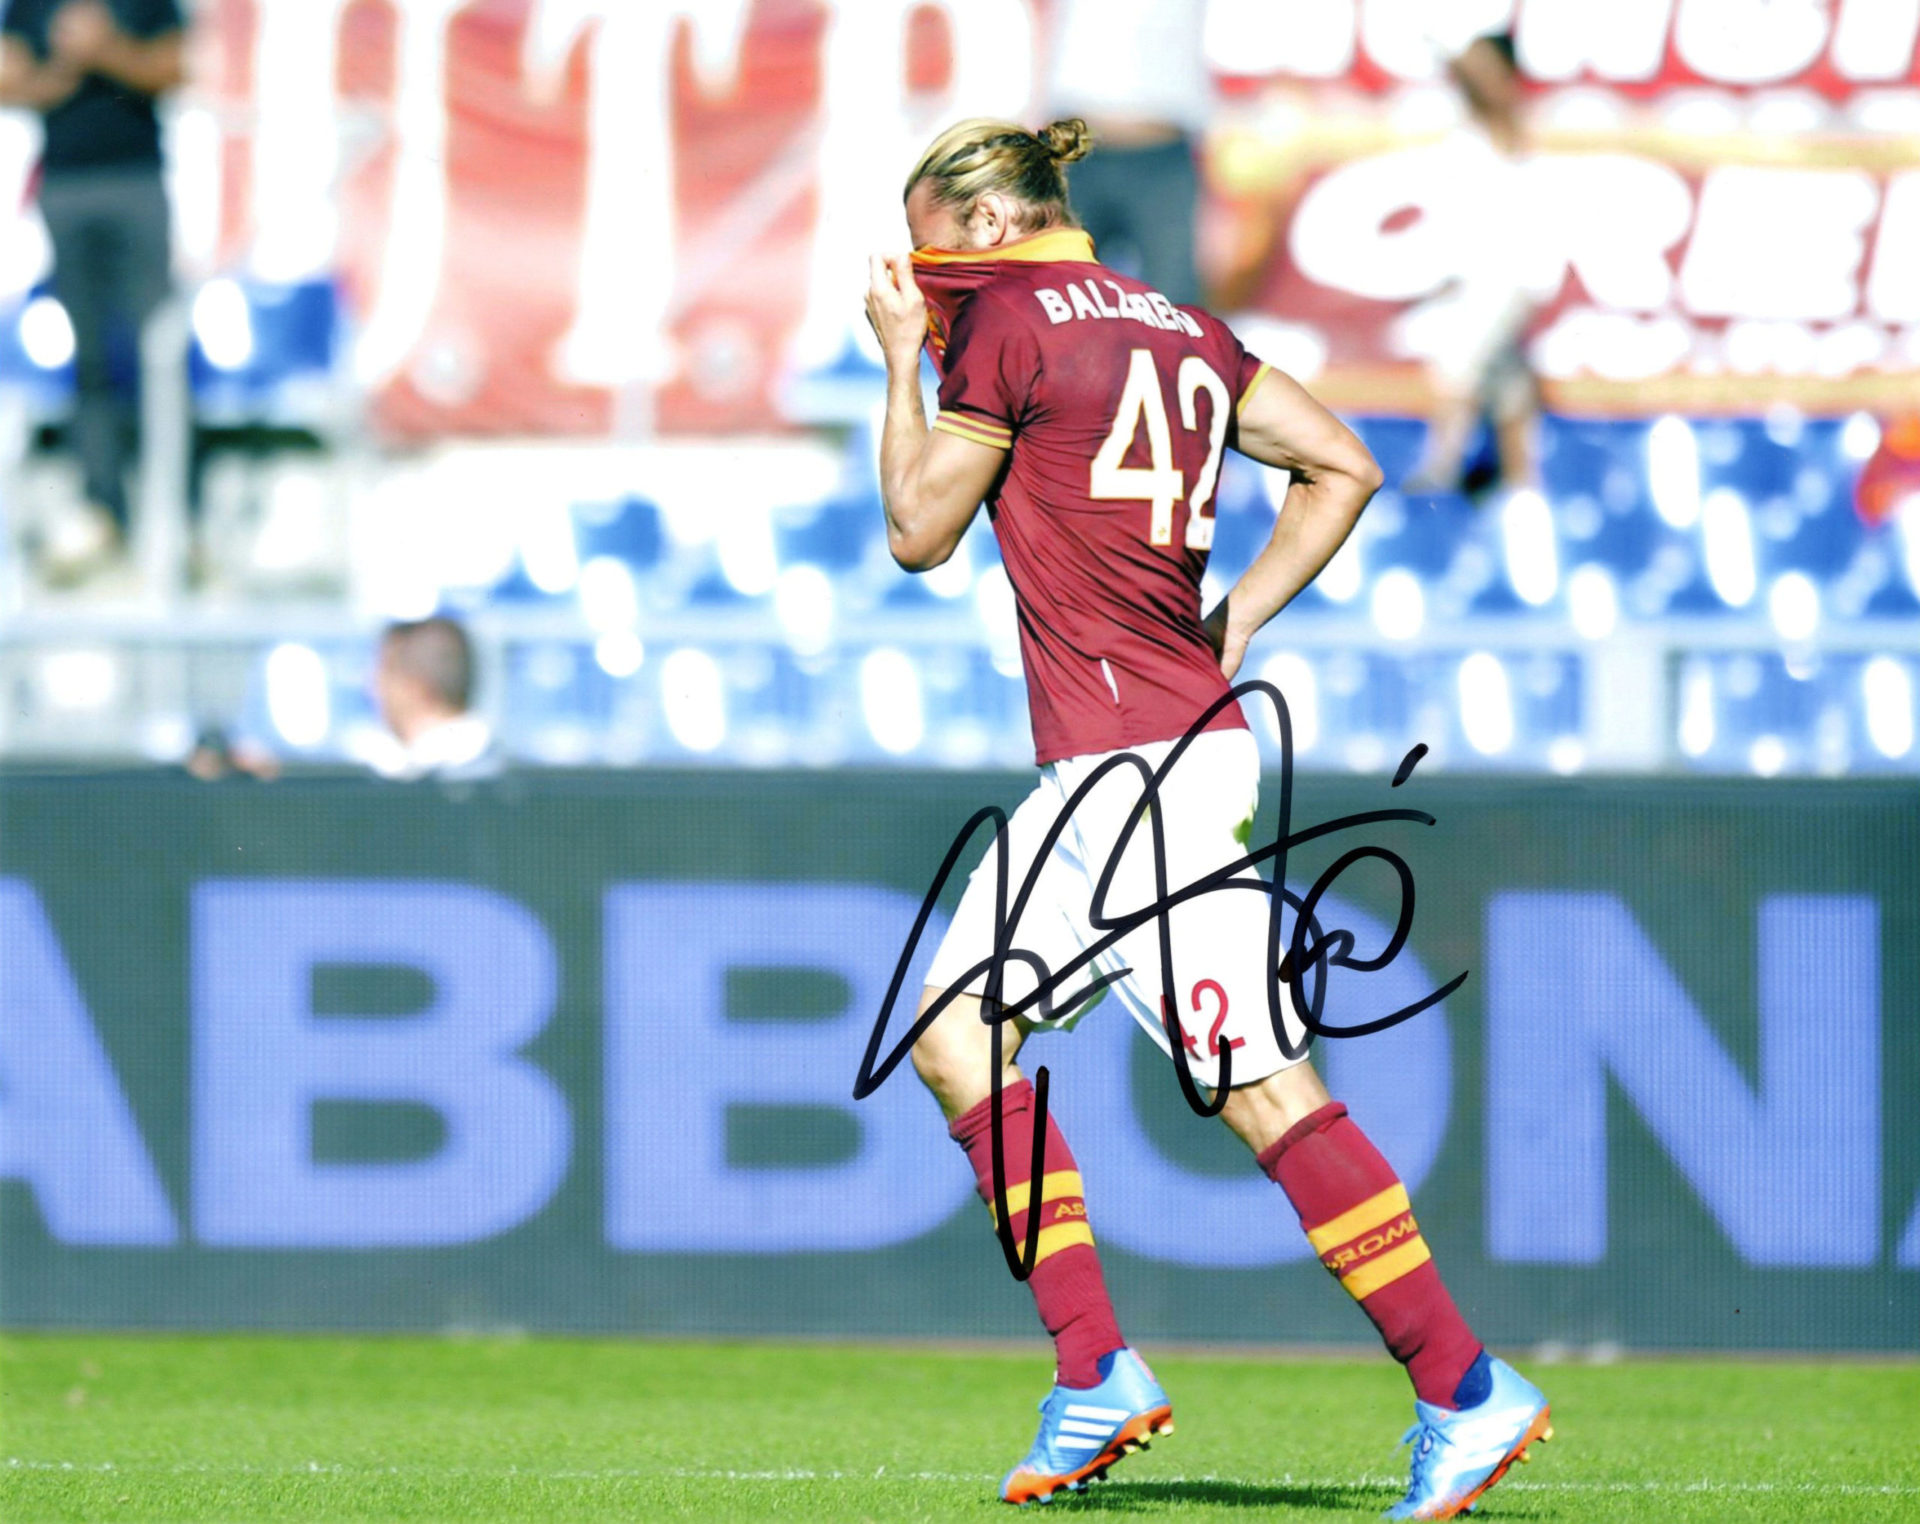 Federico Balzaretti - Signed Photo - Soccer (Palermo Football Club)